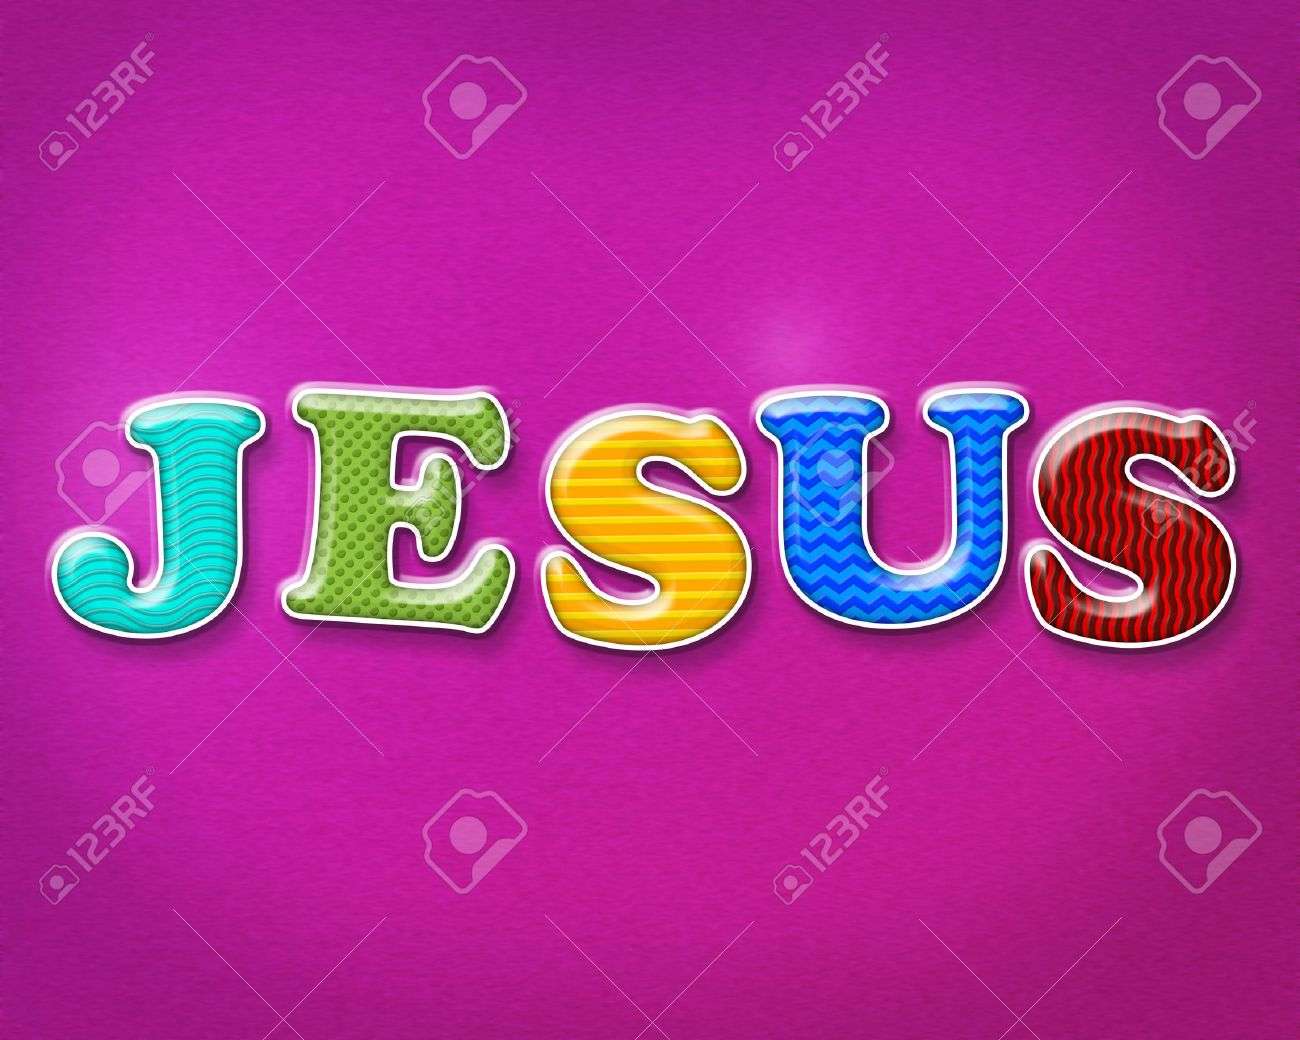 Ježíš syn Boží skládačky online